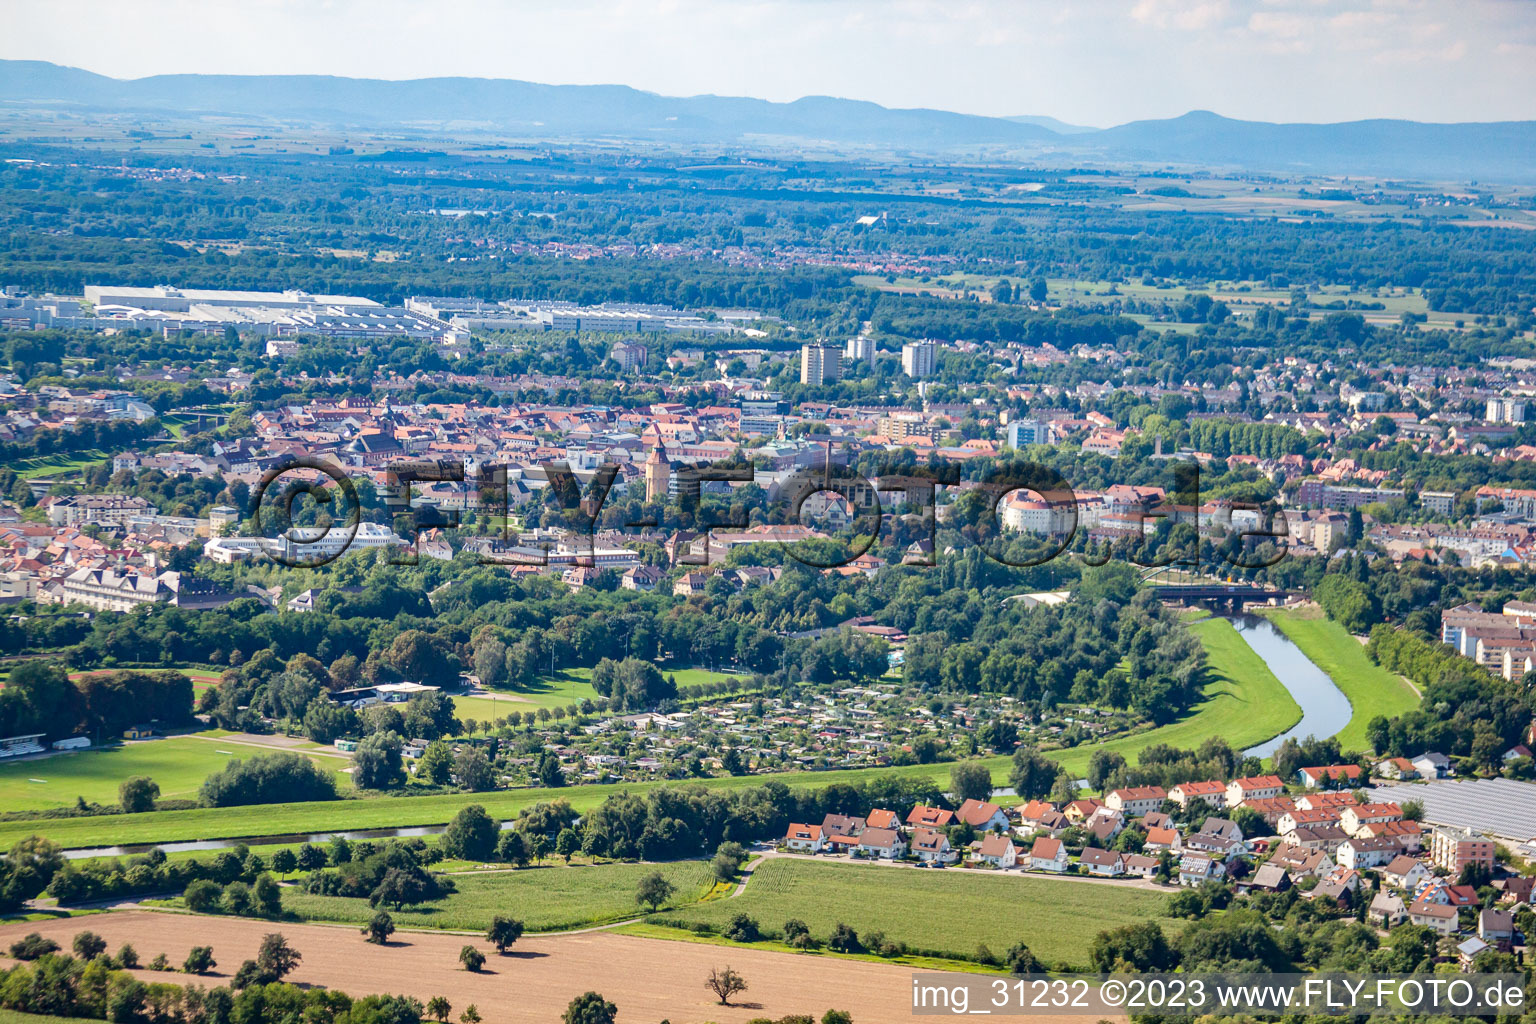 Drone image of Rastatt in the state Baden-Wuerttemberg, Germany